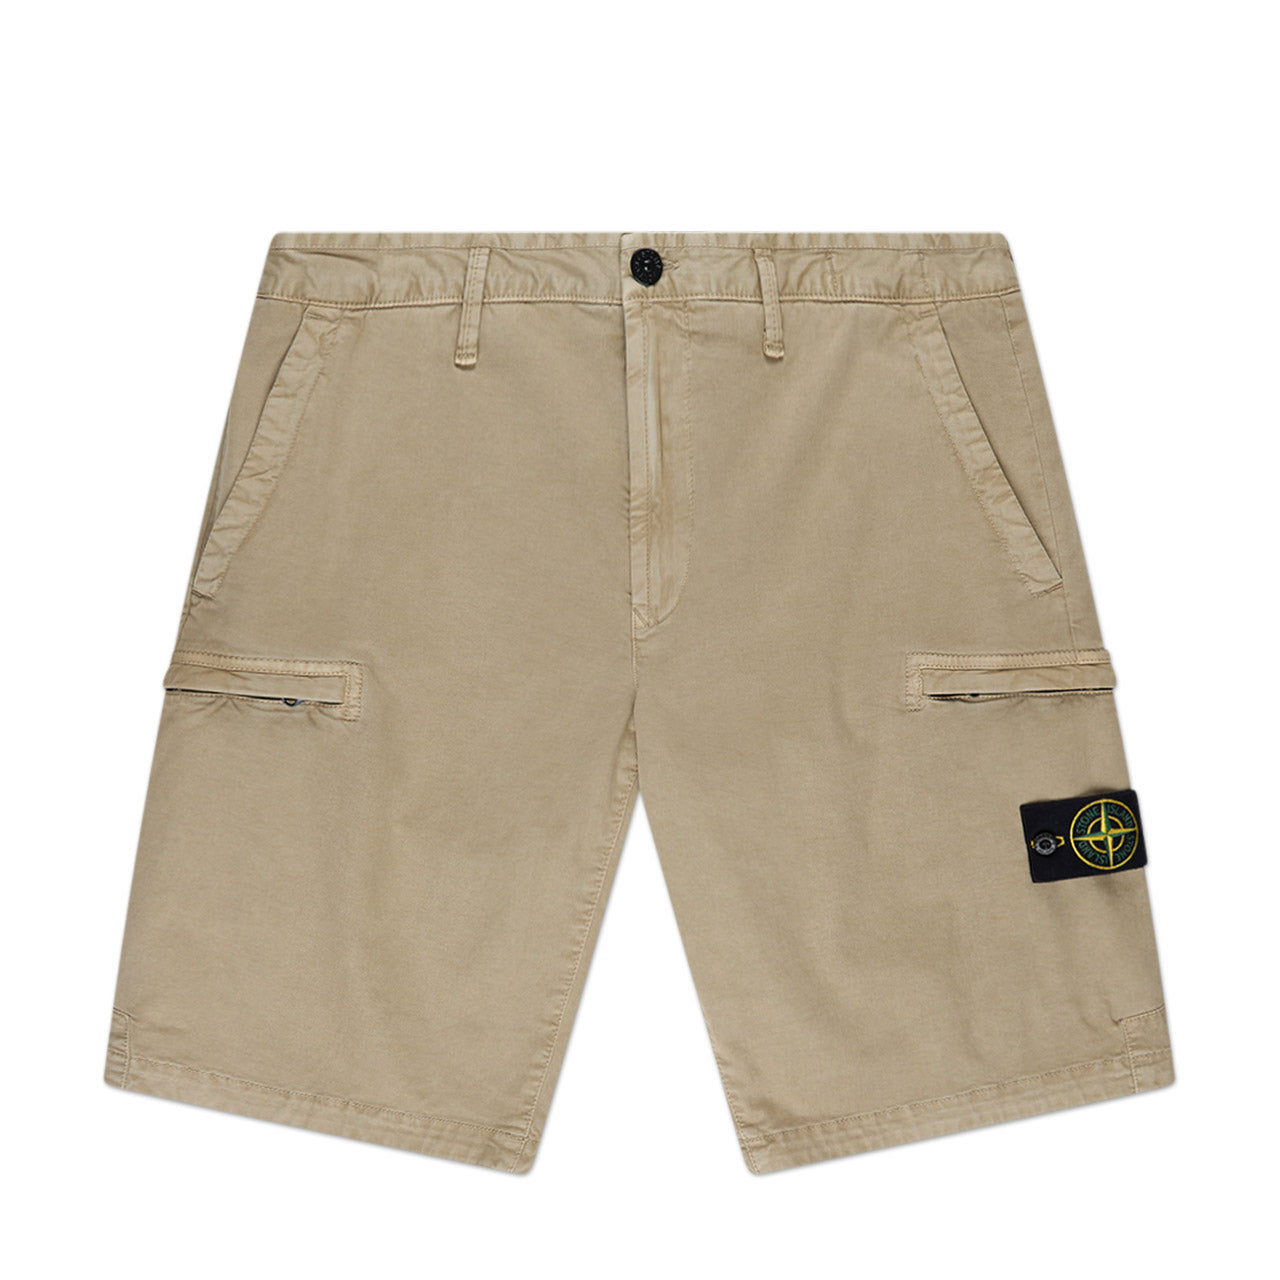 stone island t.co + old bermuda shorts (beige)